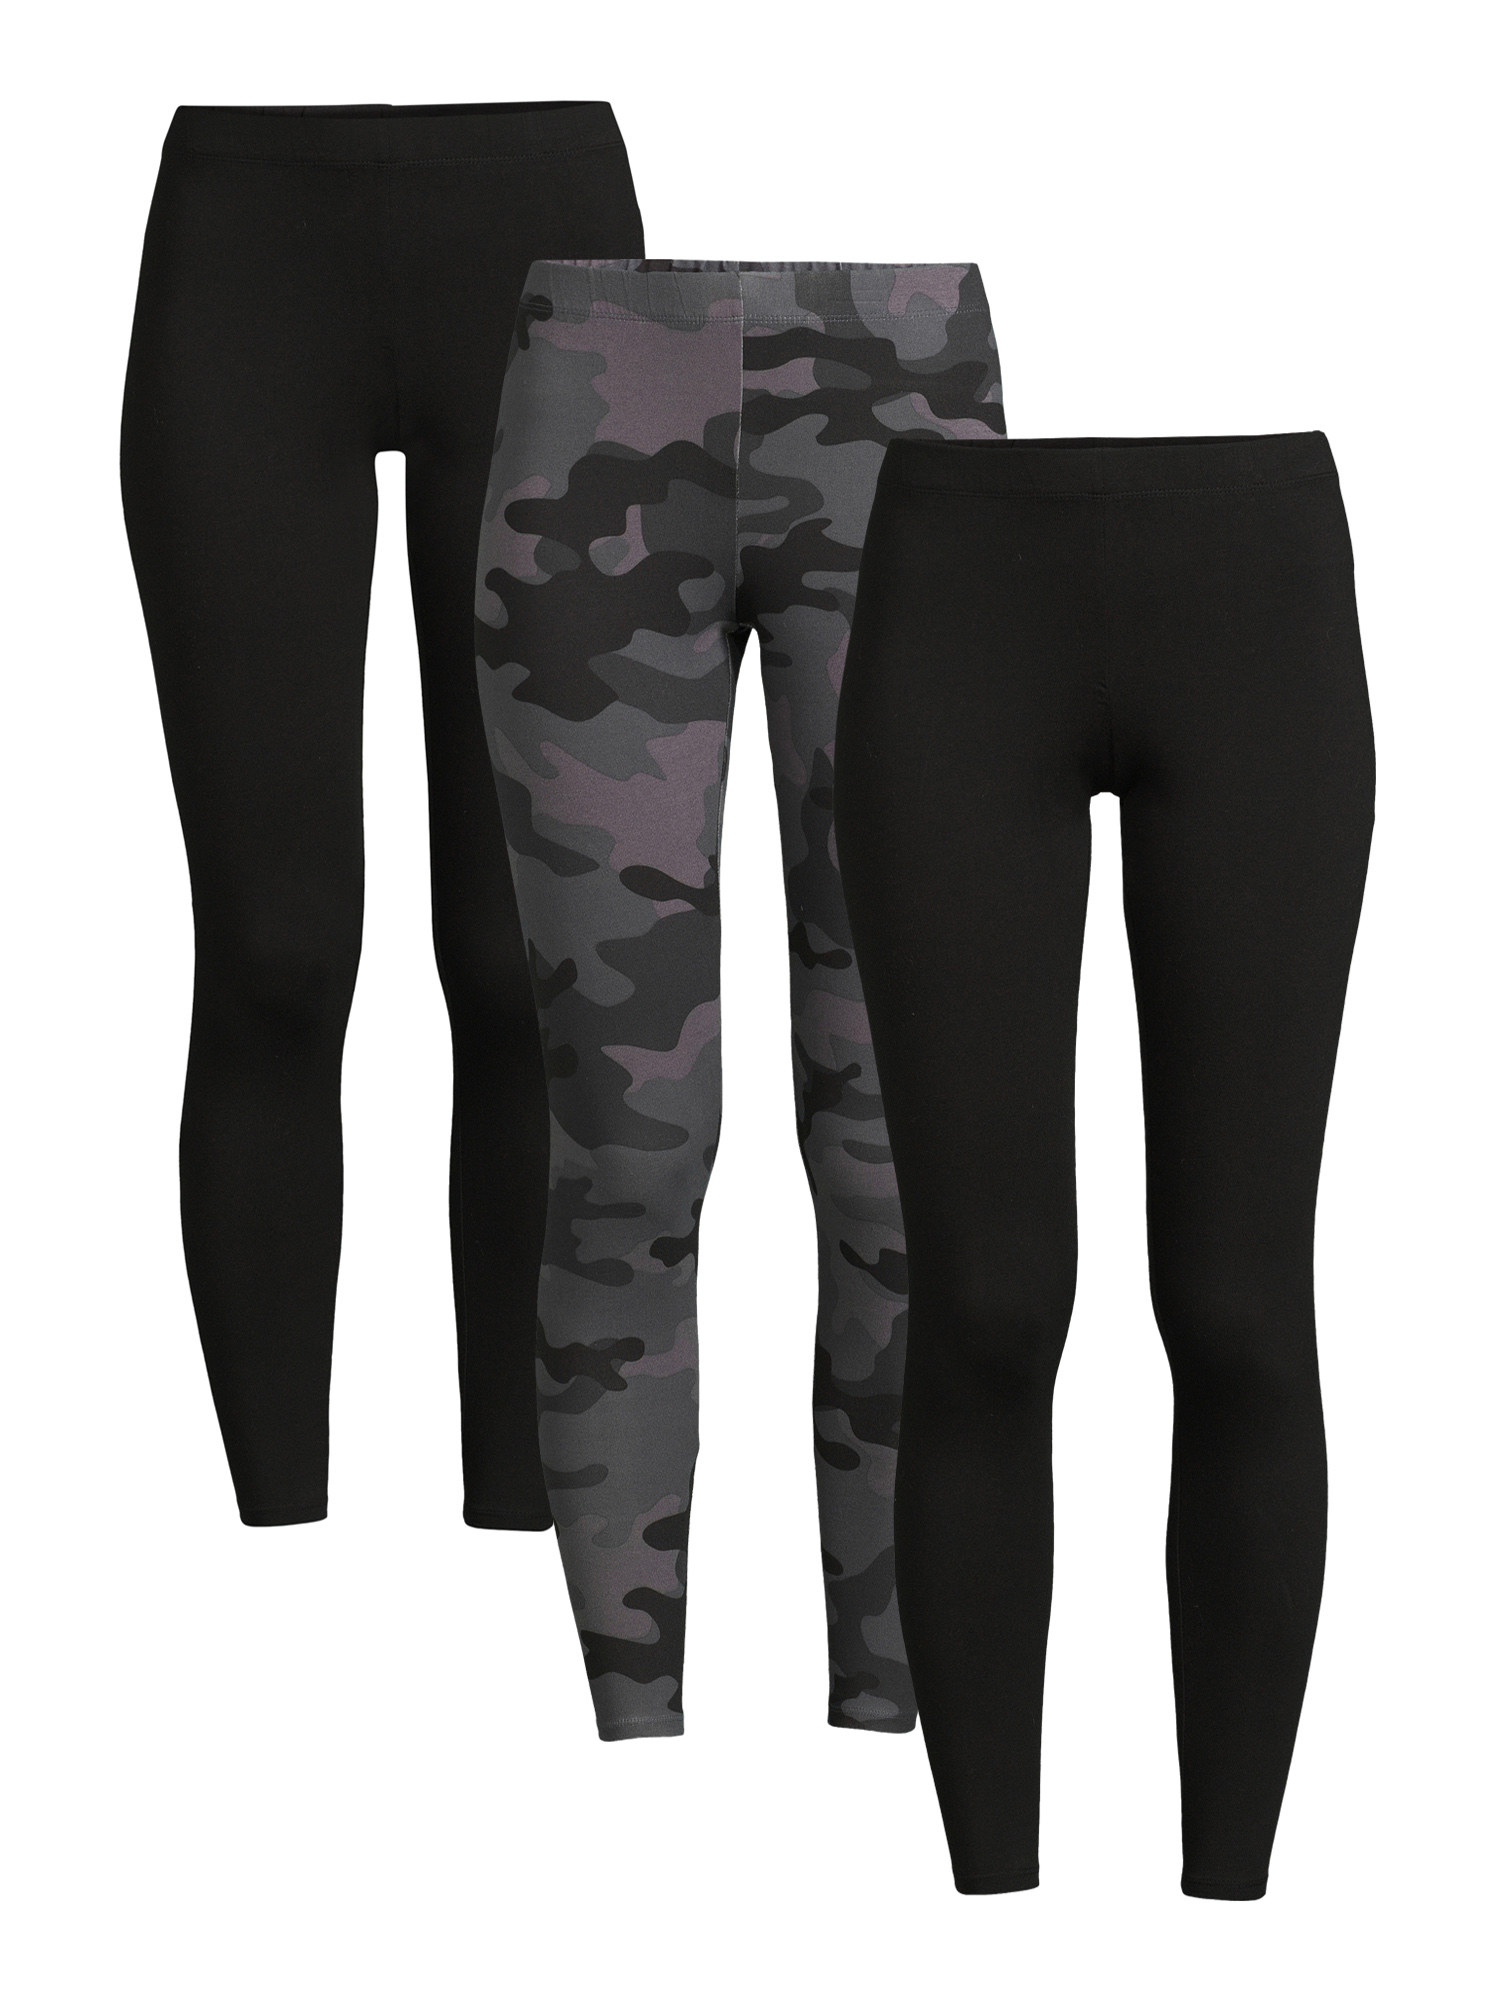 Three-pack of leggings: black leggings, gray camouflage leggings, black leggings